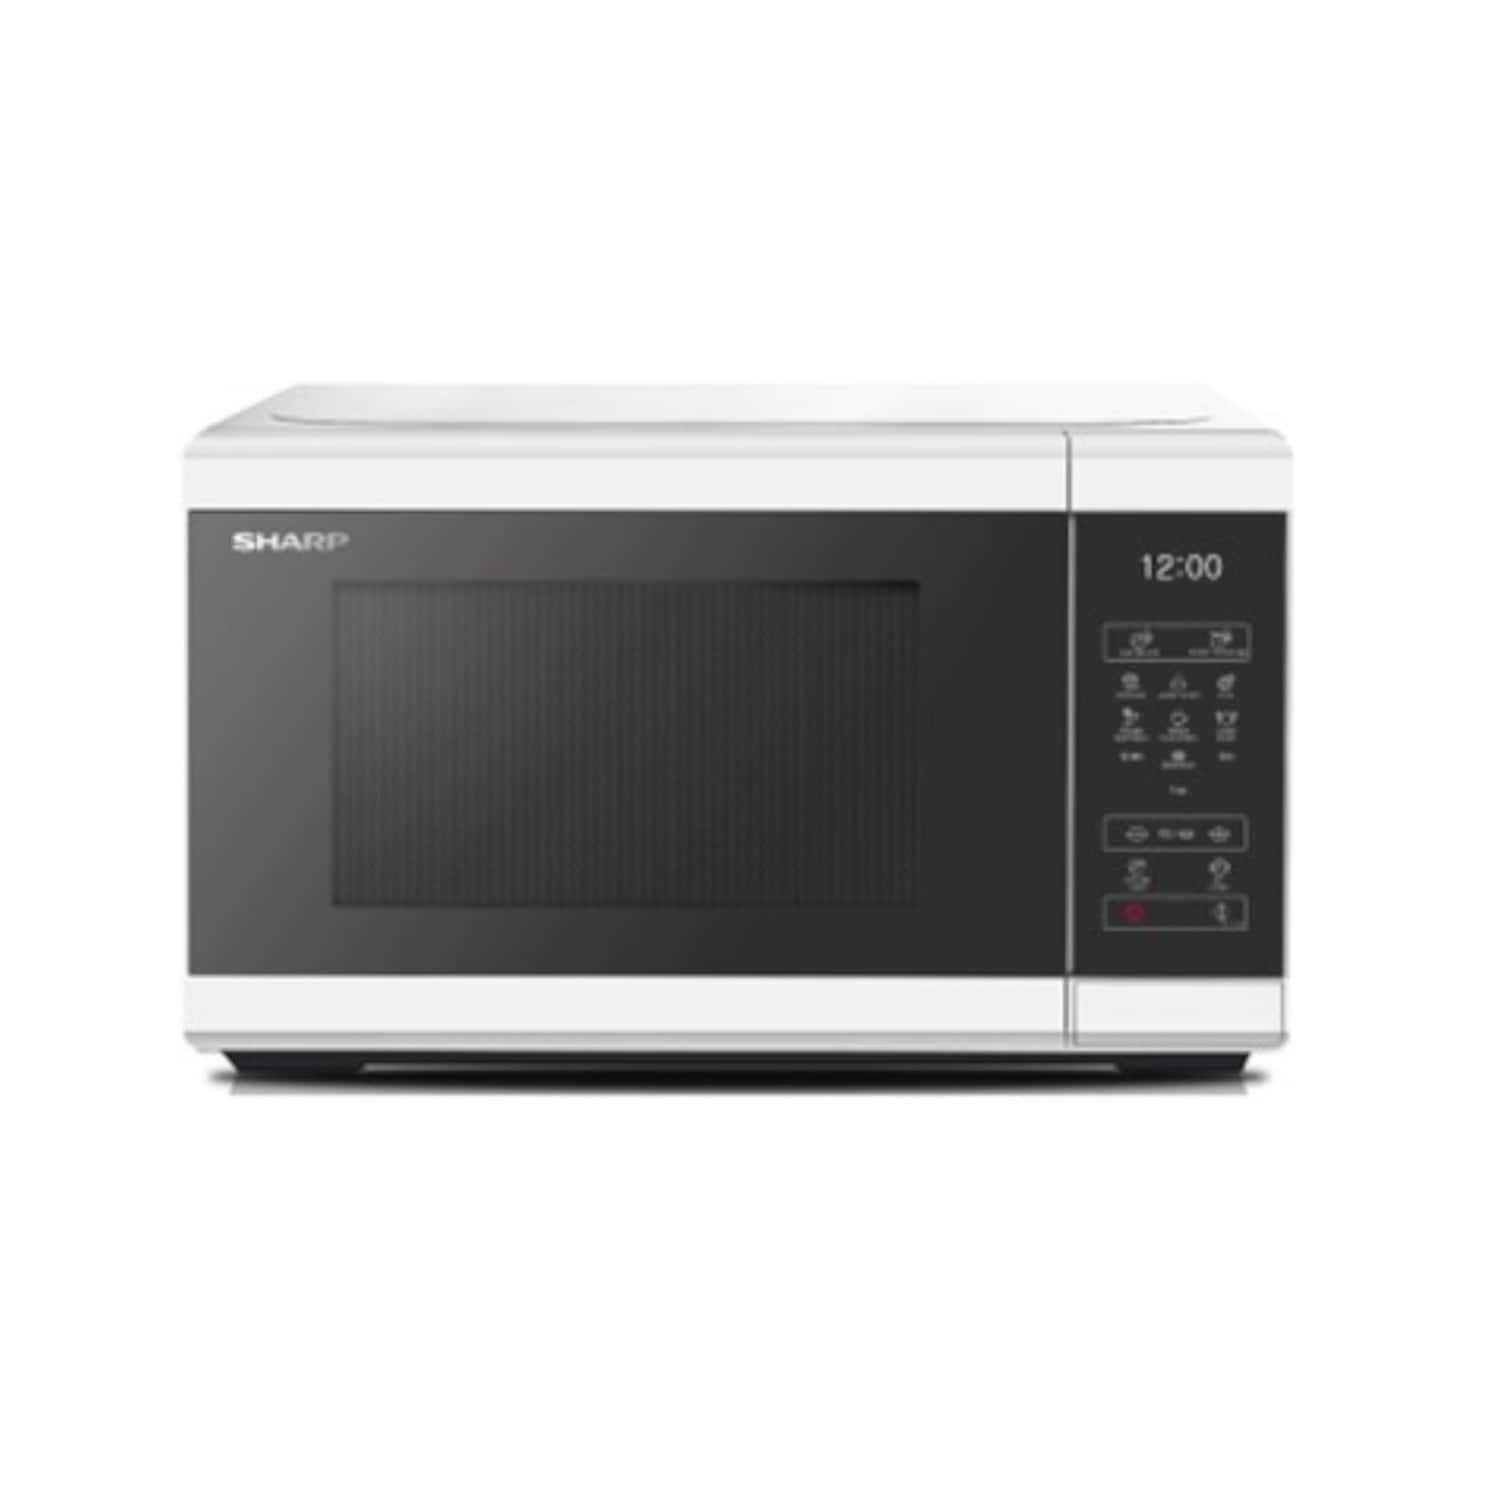 Avanti 0.7 Cu. ft. 700W Countertop Manual Microwave Oven - Black